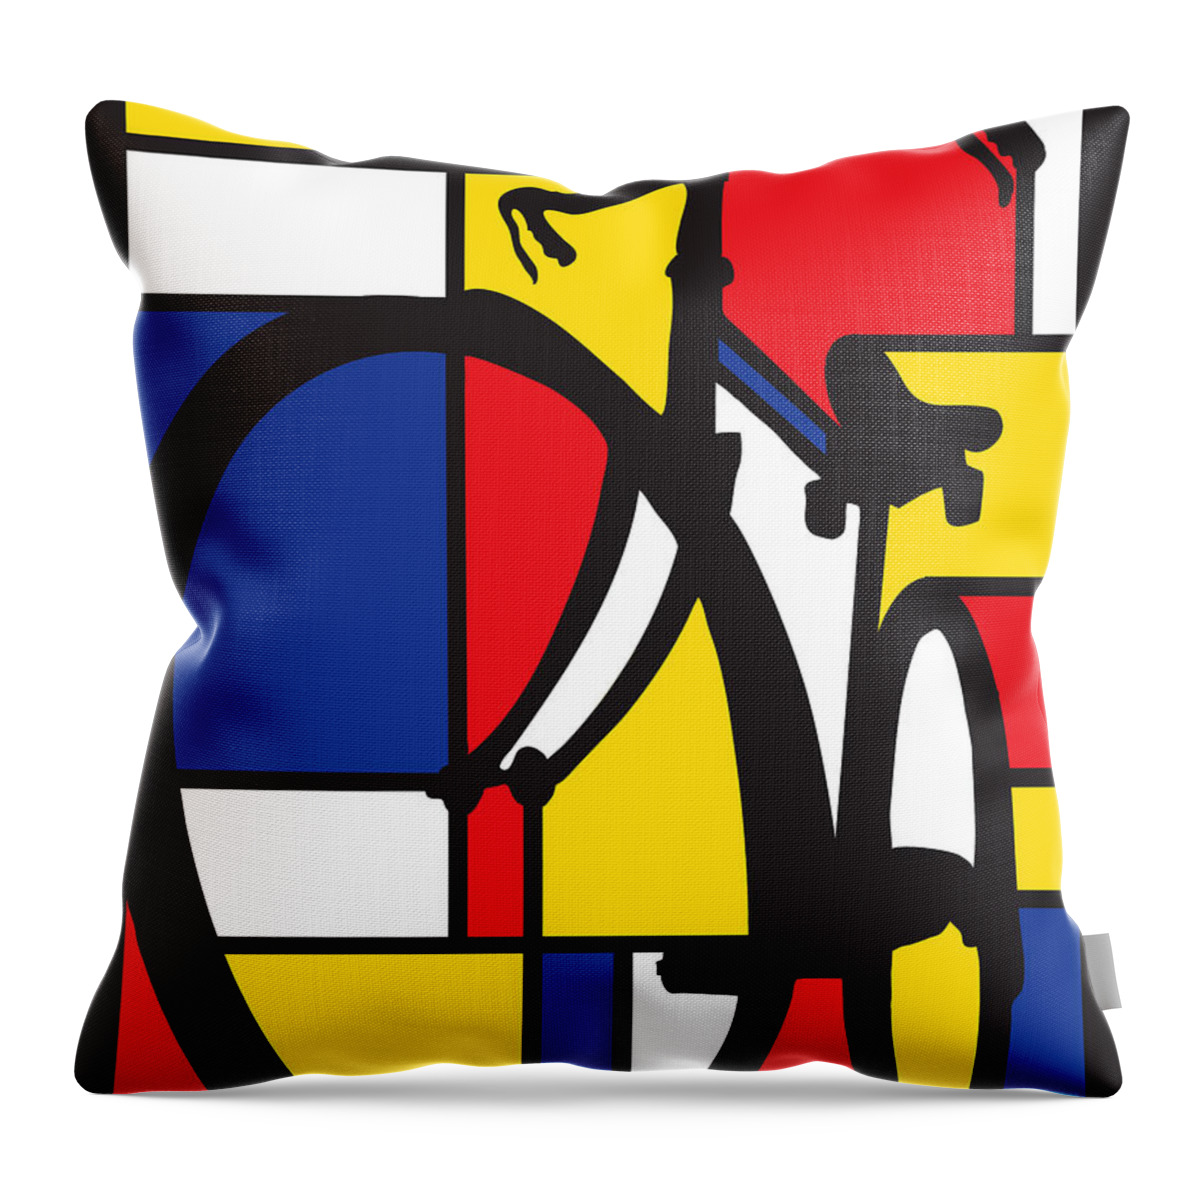 Mondrian Throw Pillow featuring the painting Mondrian Bike by Sassan Filsoof